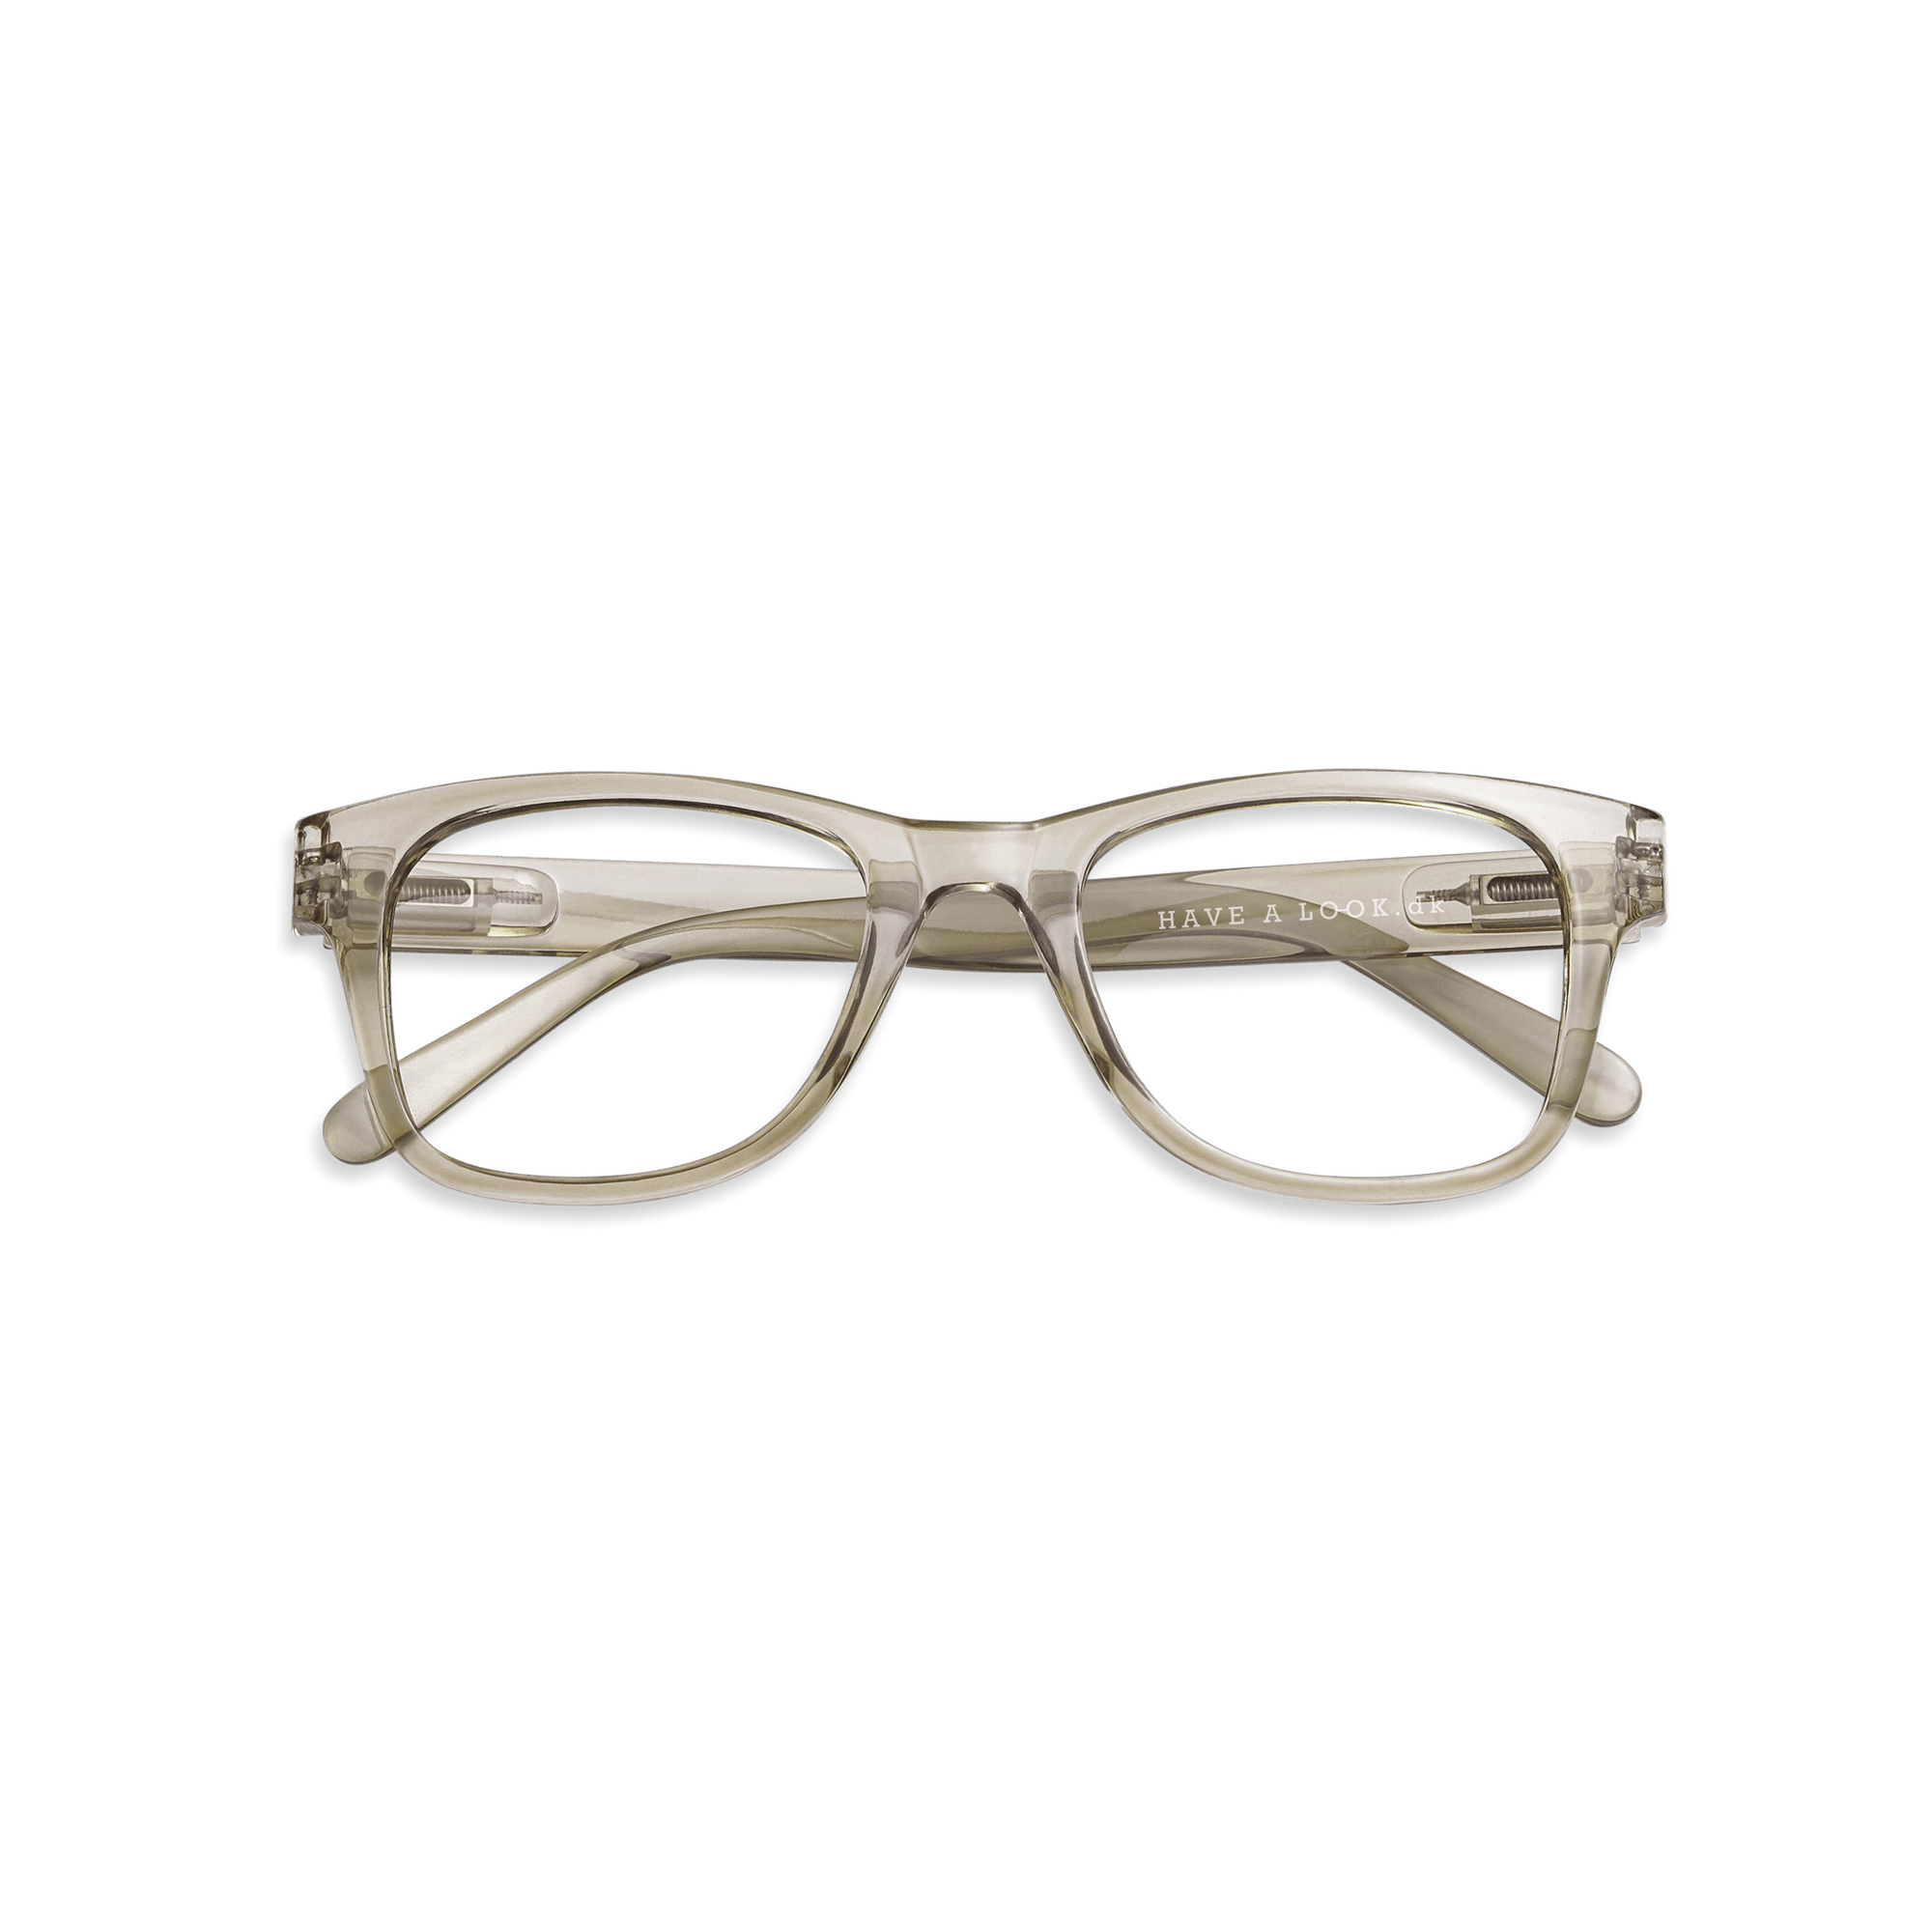 Minus glasses Type B - olive